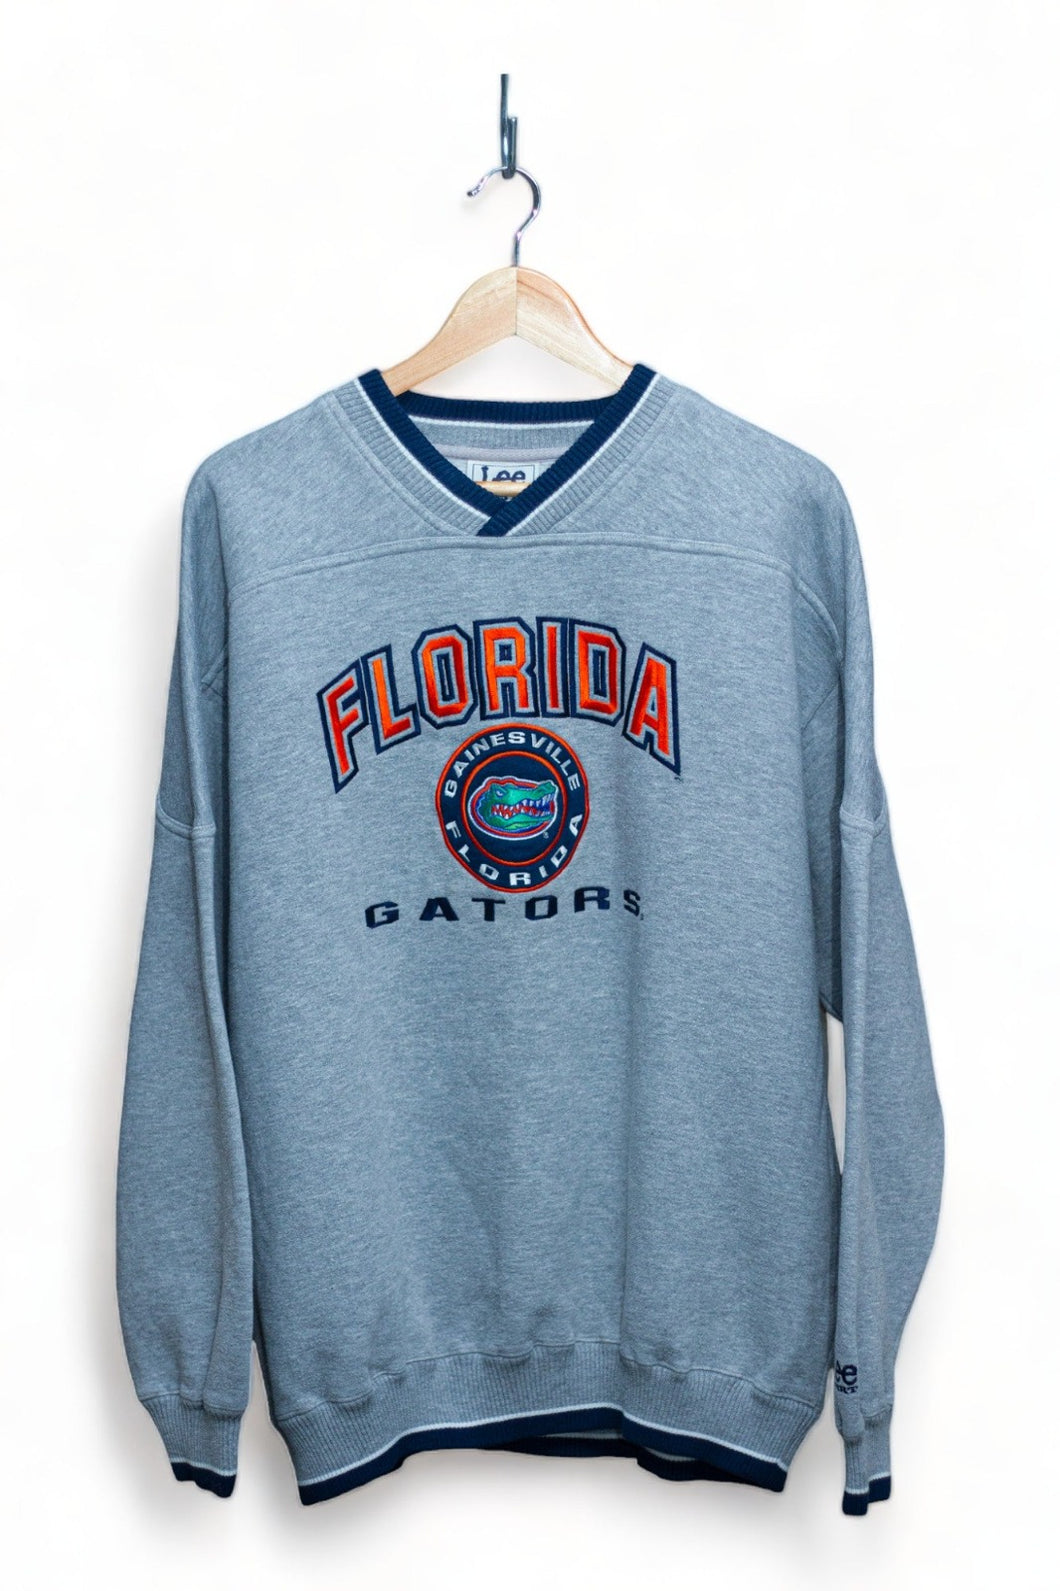 Florida Gators - Embroidered Sweater (XL)